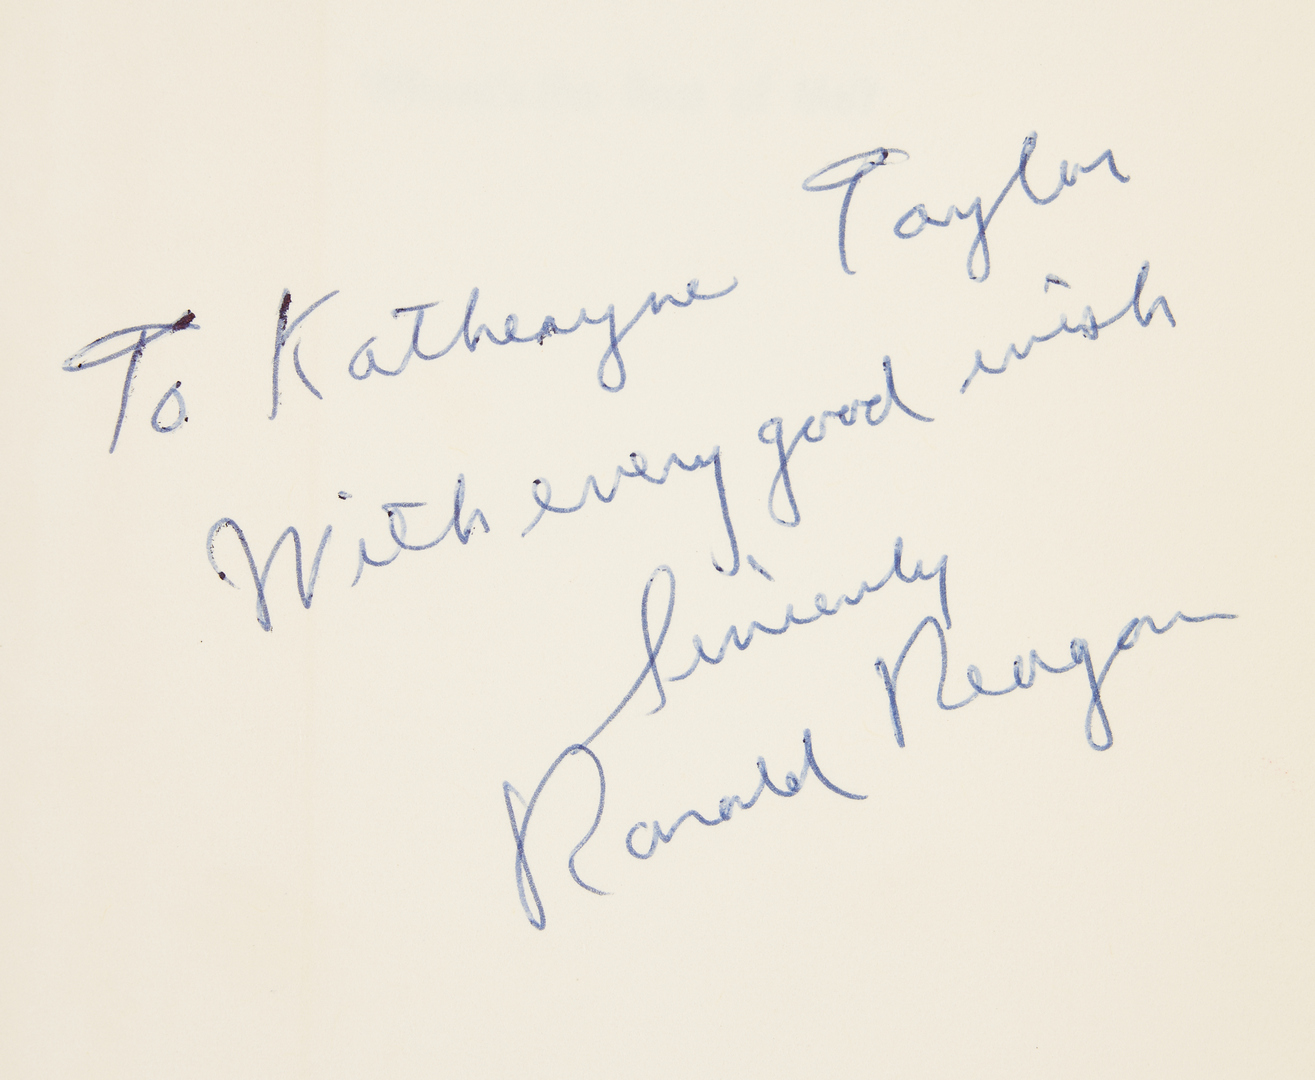 Lot 736: 3 Ronald Reagan Items, incl. Signed Book